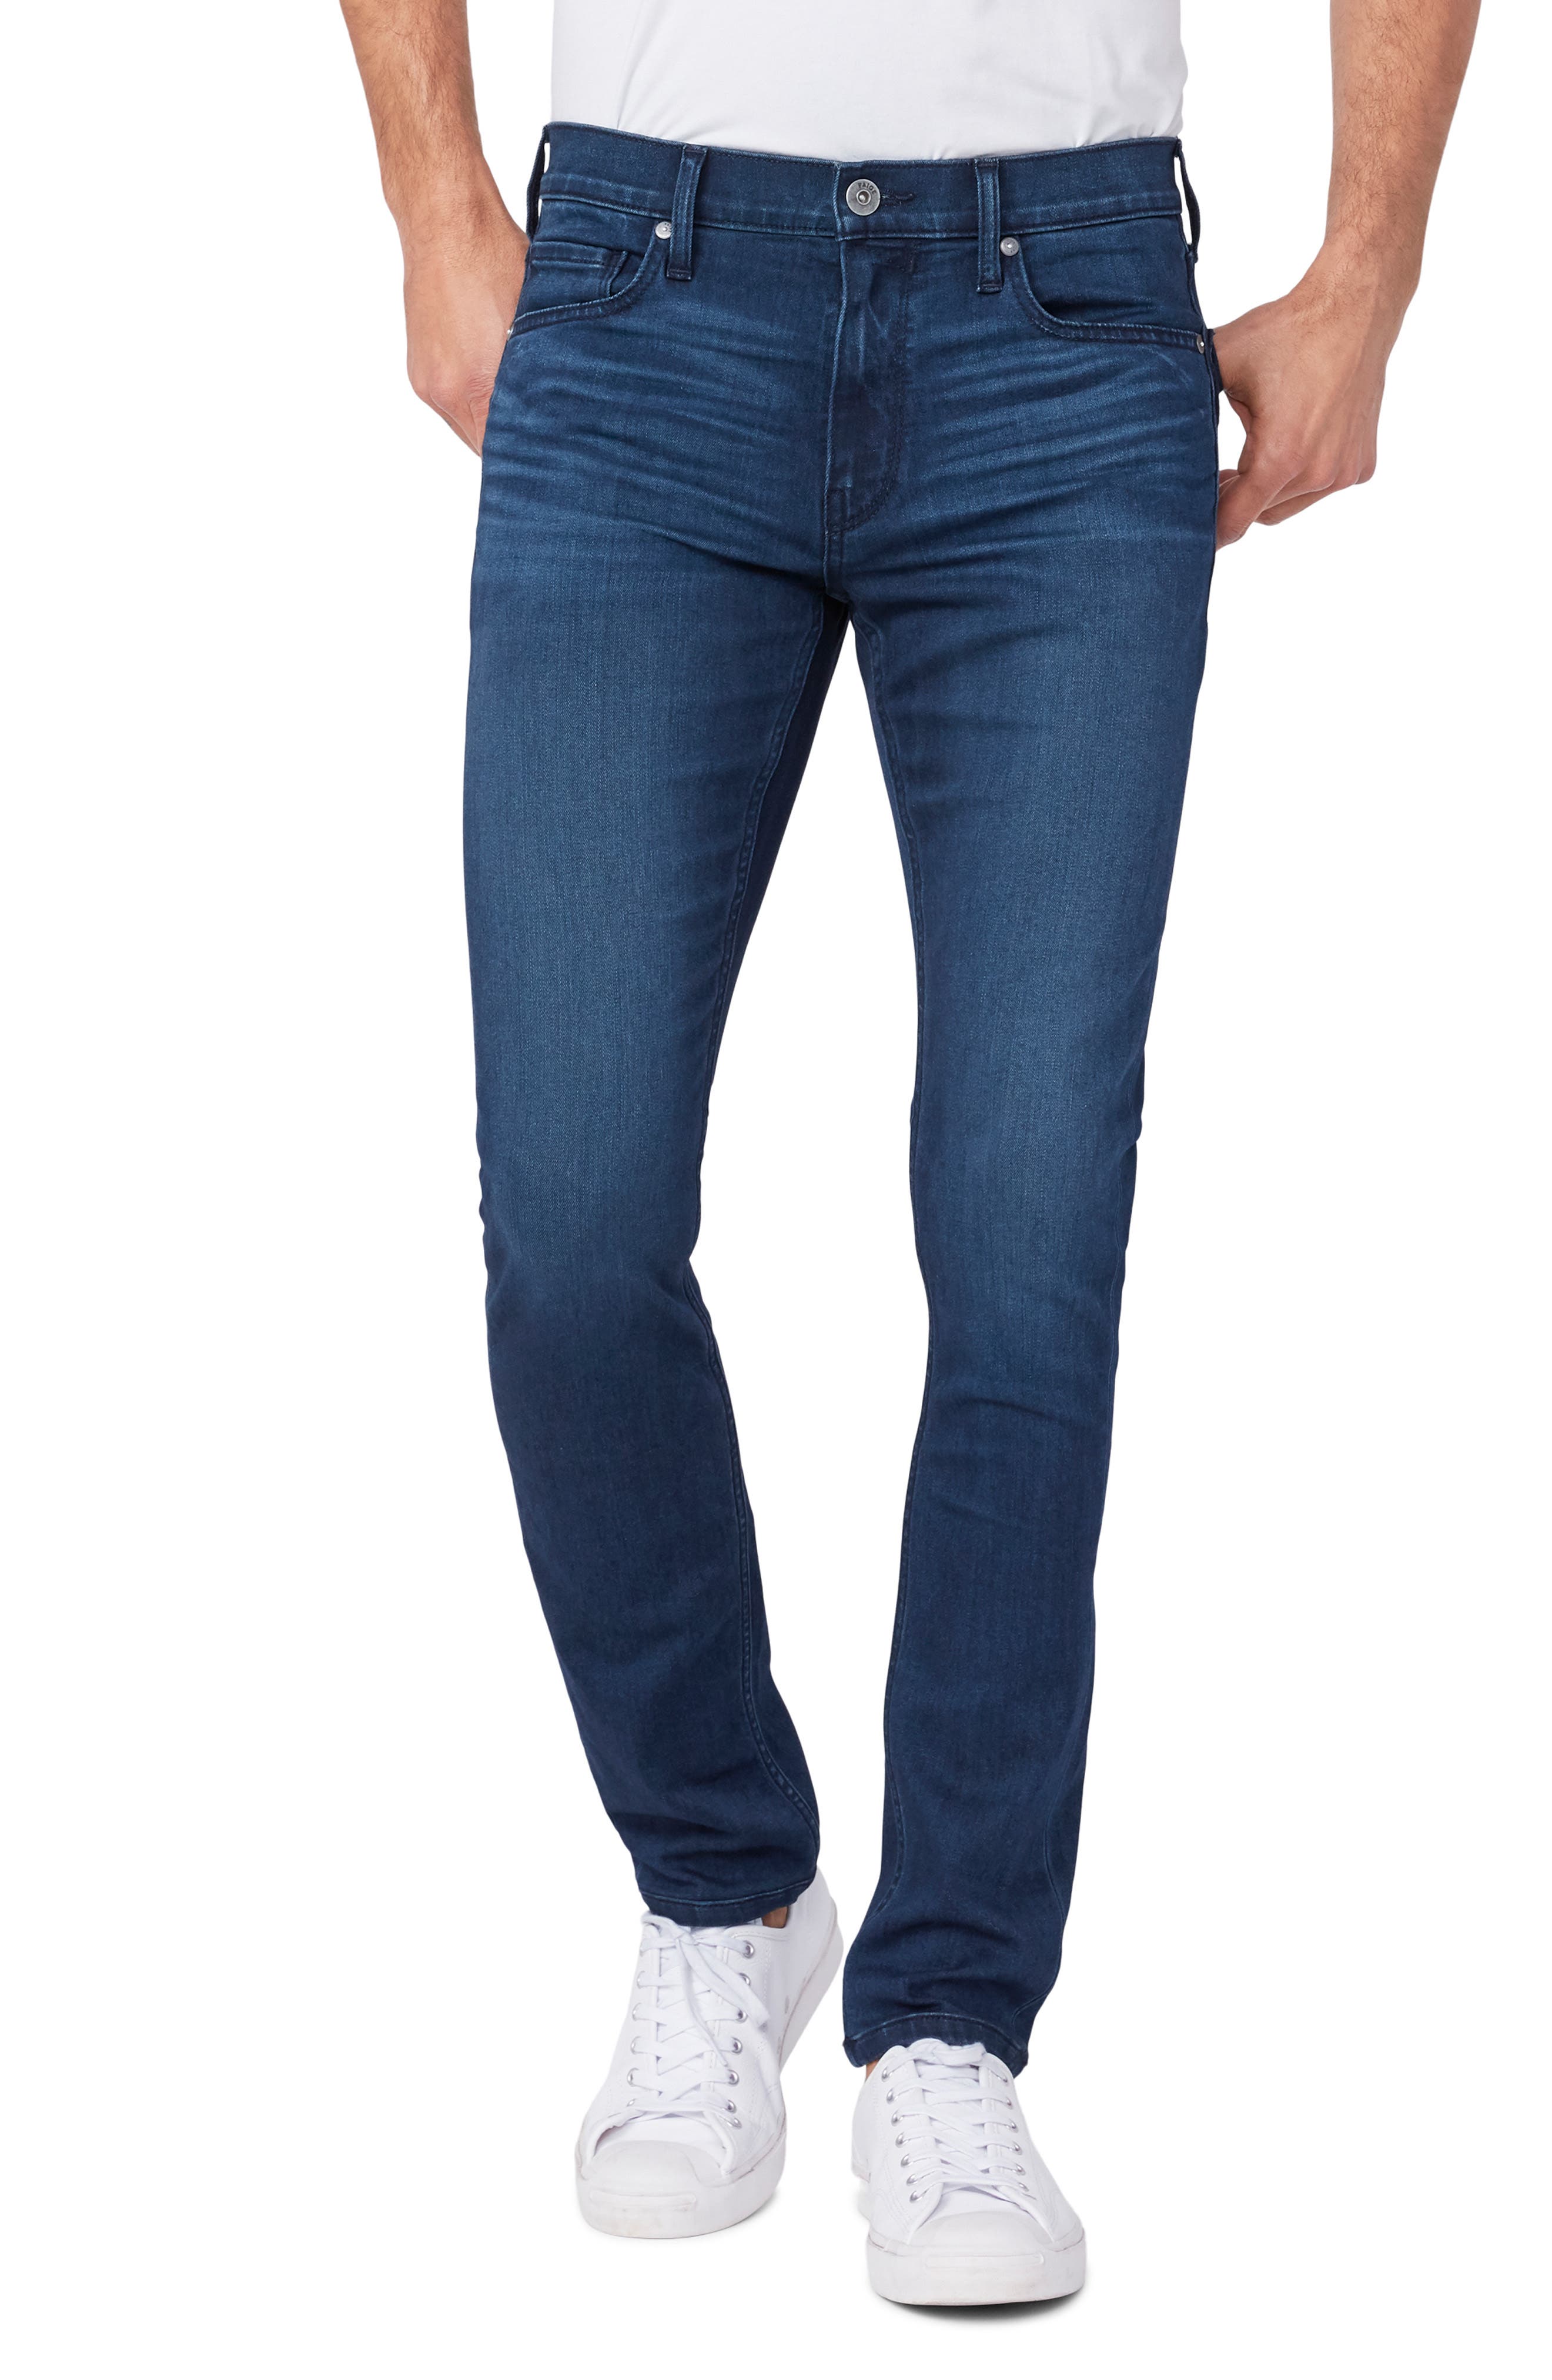 PAIGE Denim Croft Blue Skinny Jeans for Men Mens Clothing Jeans Skinny jeans 